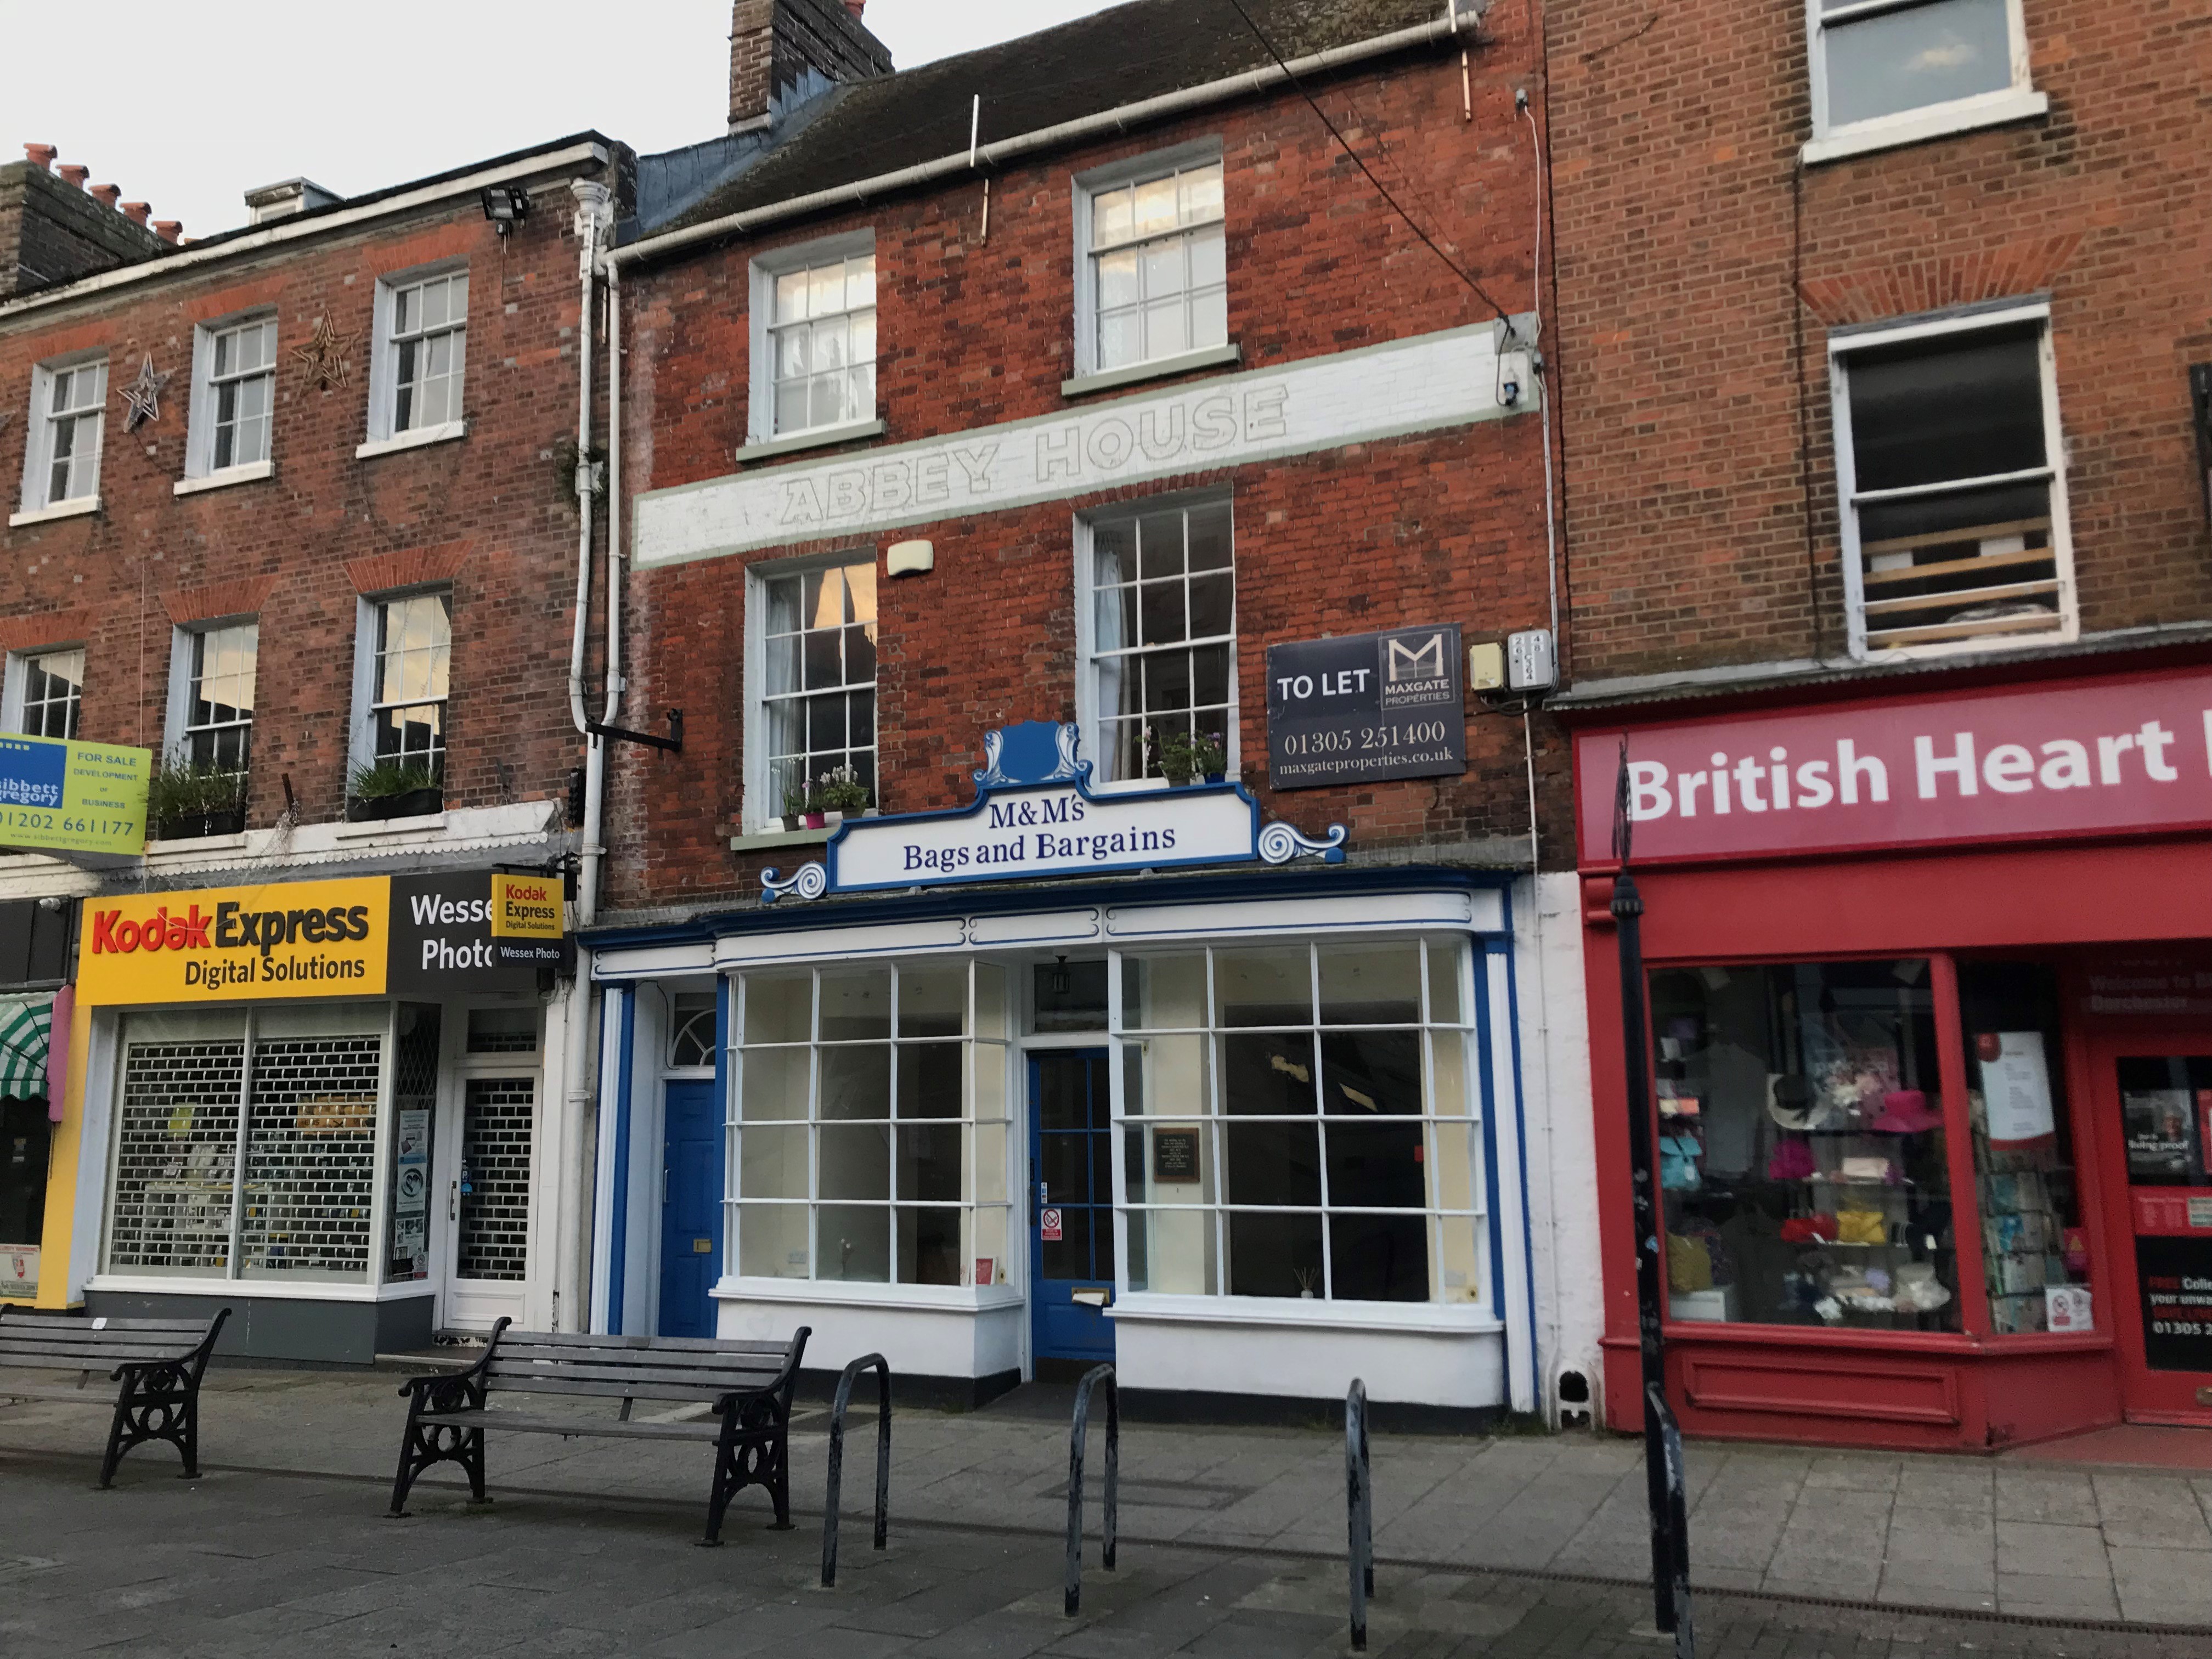 The Regency shop front in Cornhill, Dorchester